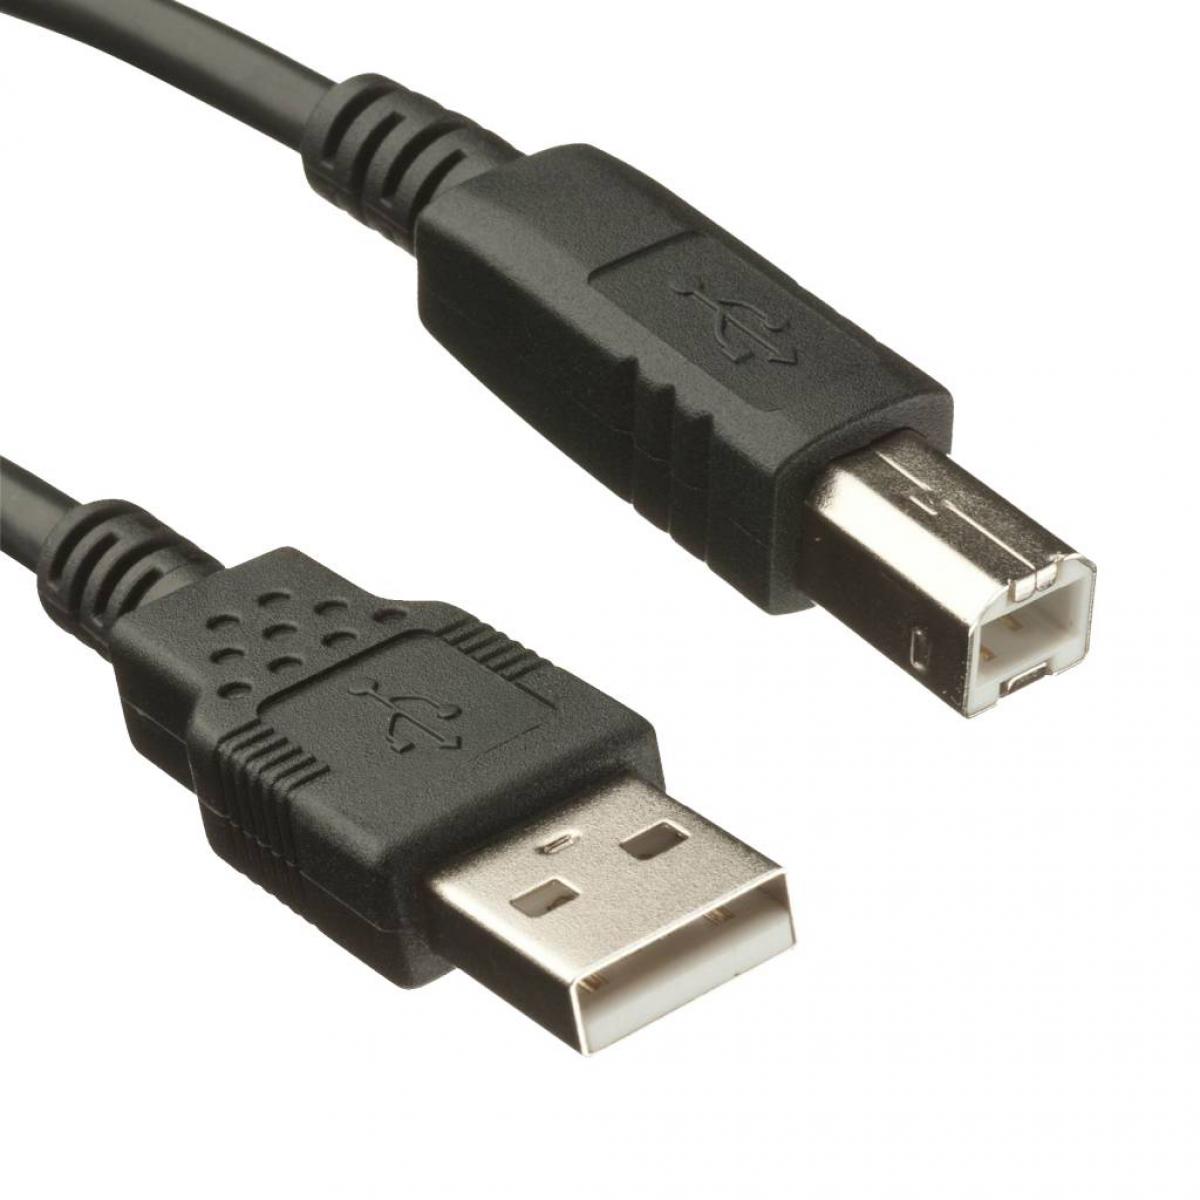 Xtech XT-303 10 FT USB 2.0 A-printer cable